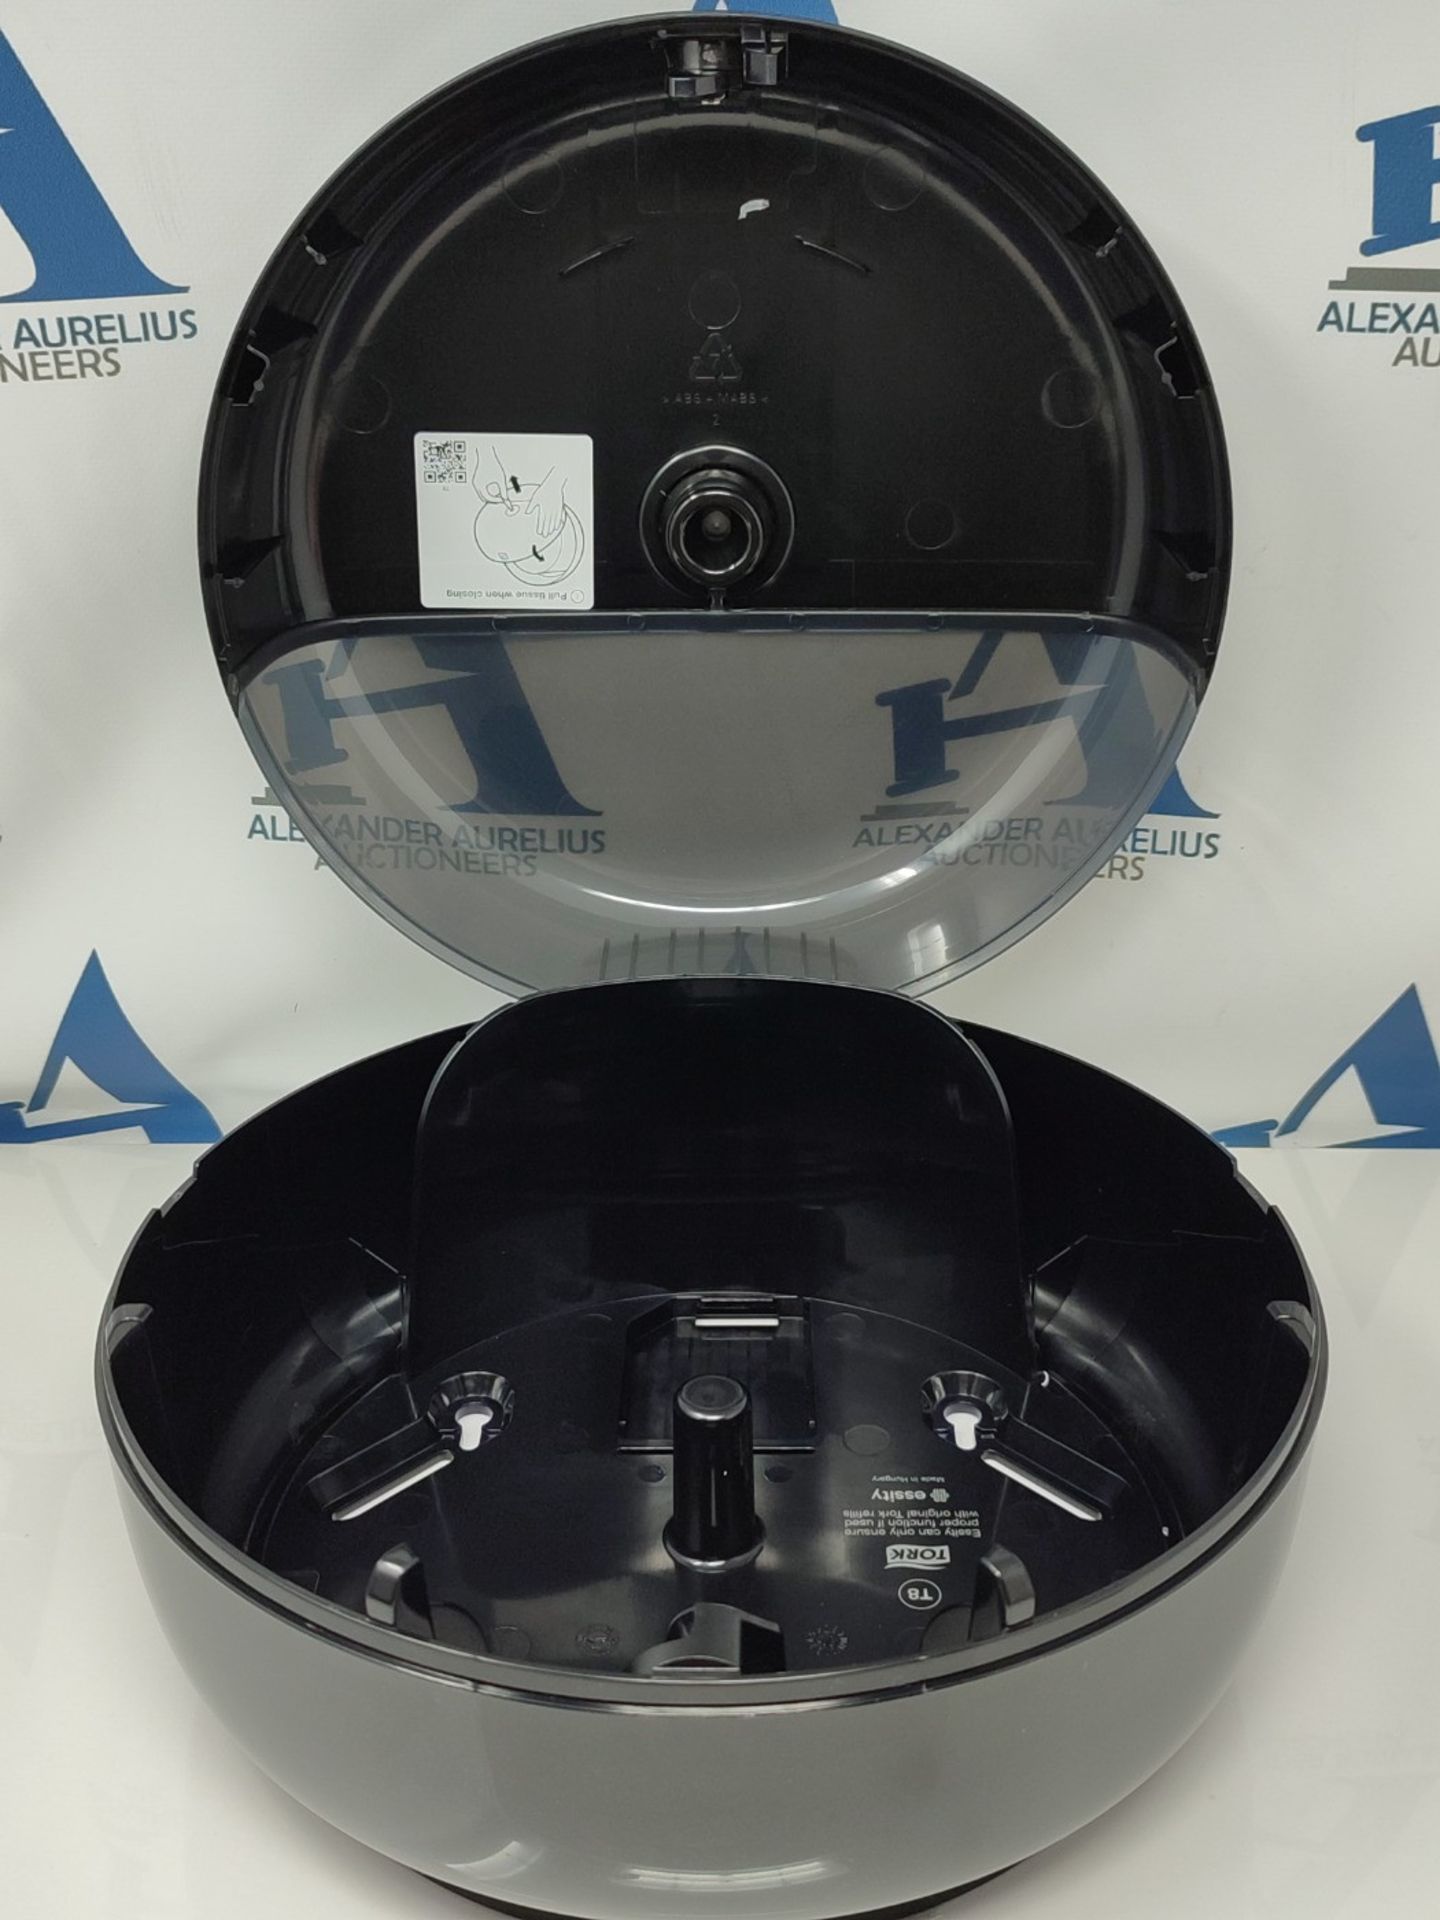 Tork SmartOne Toilet Roll Dispenser Black T8, High Capacity, Elevation Range, 680008 - Image 2 of 3